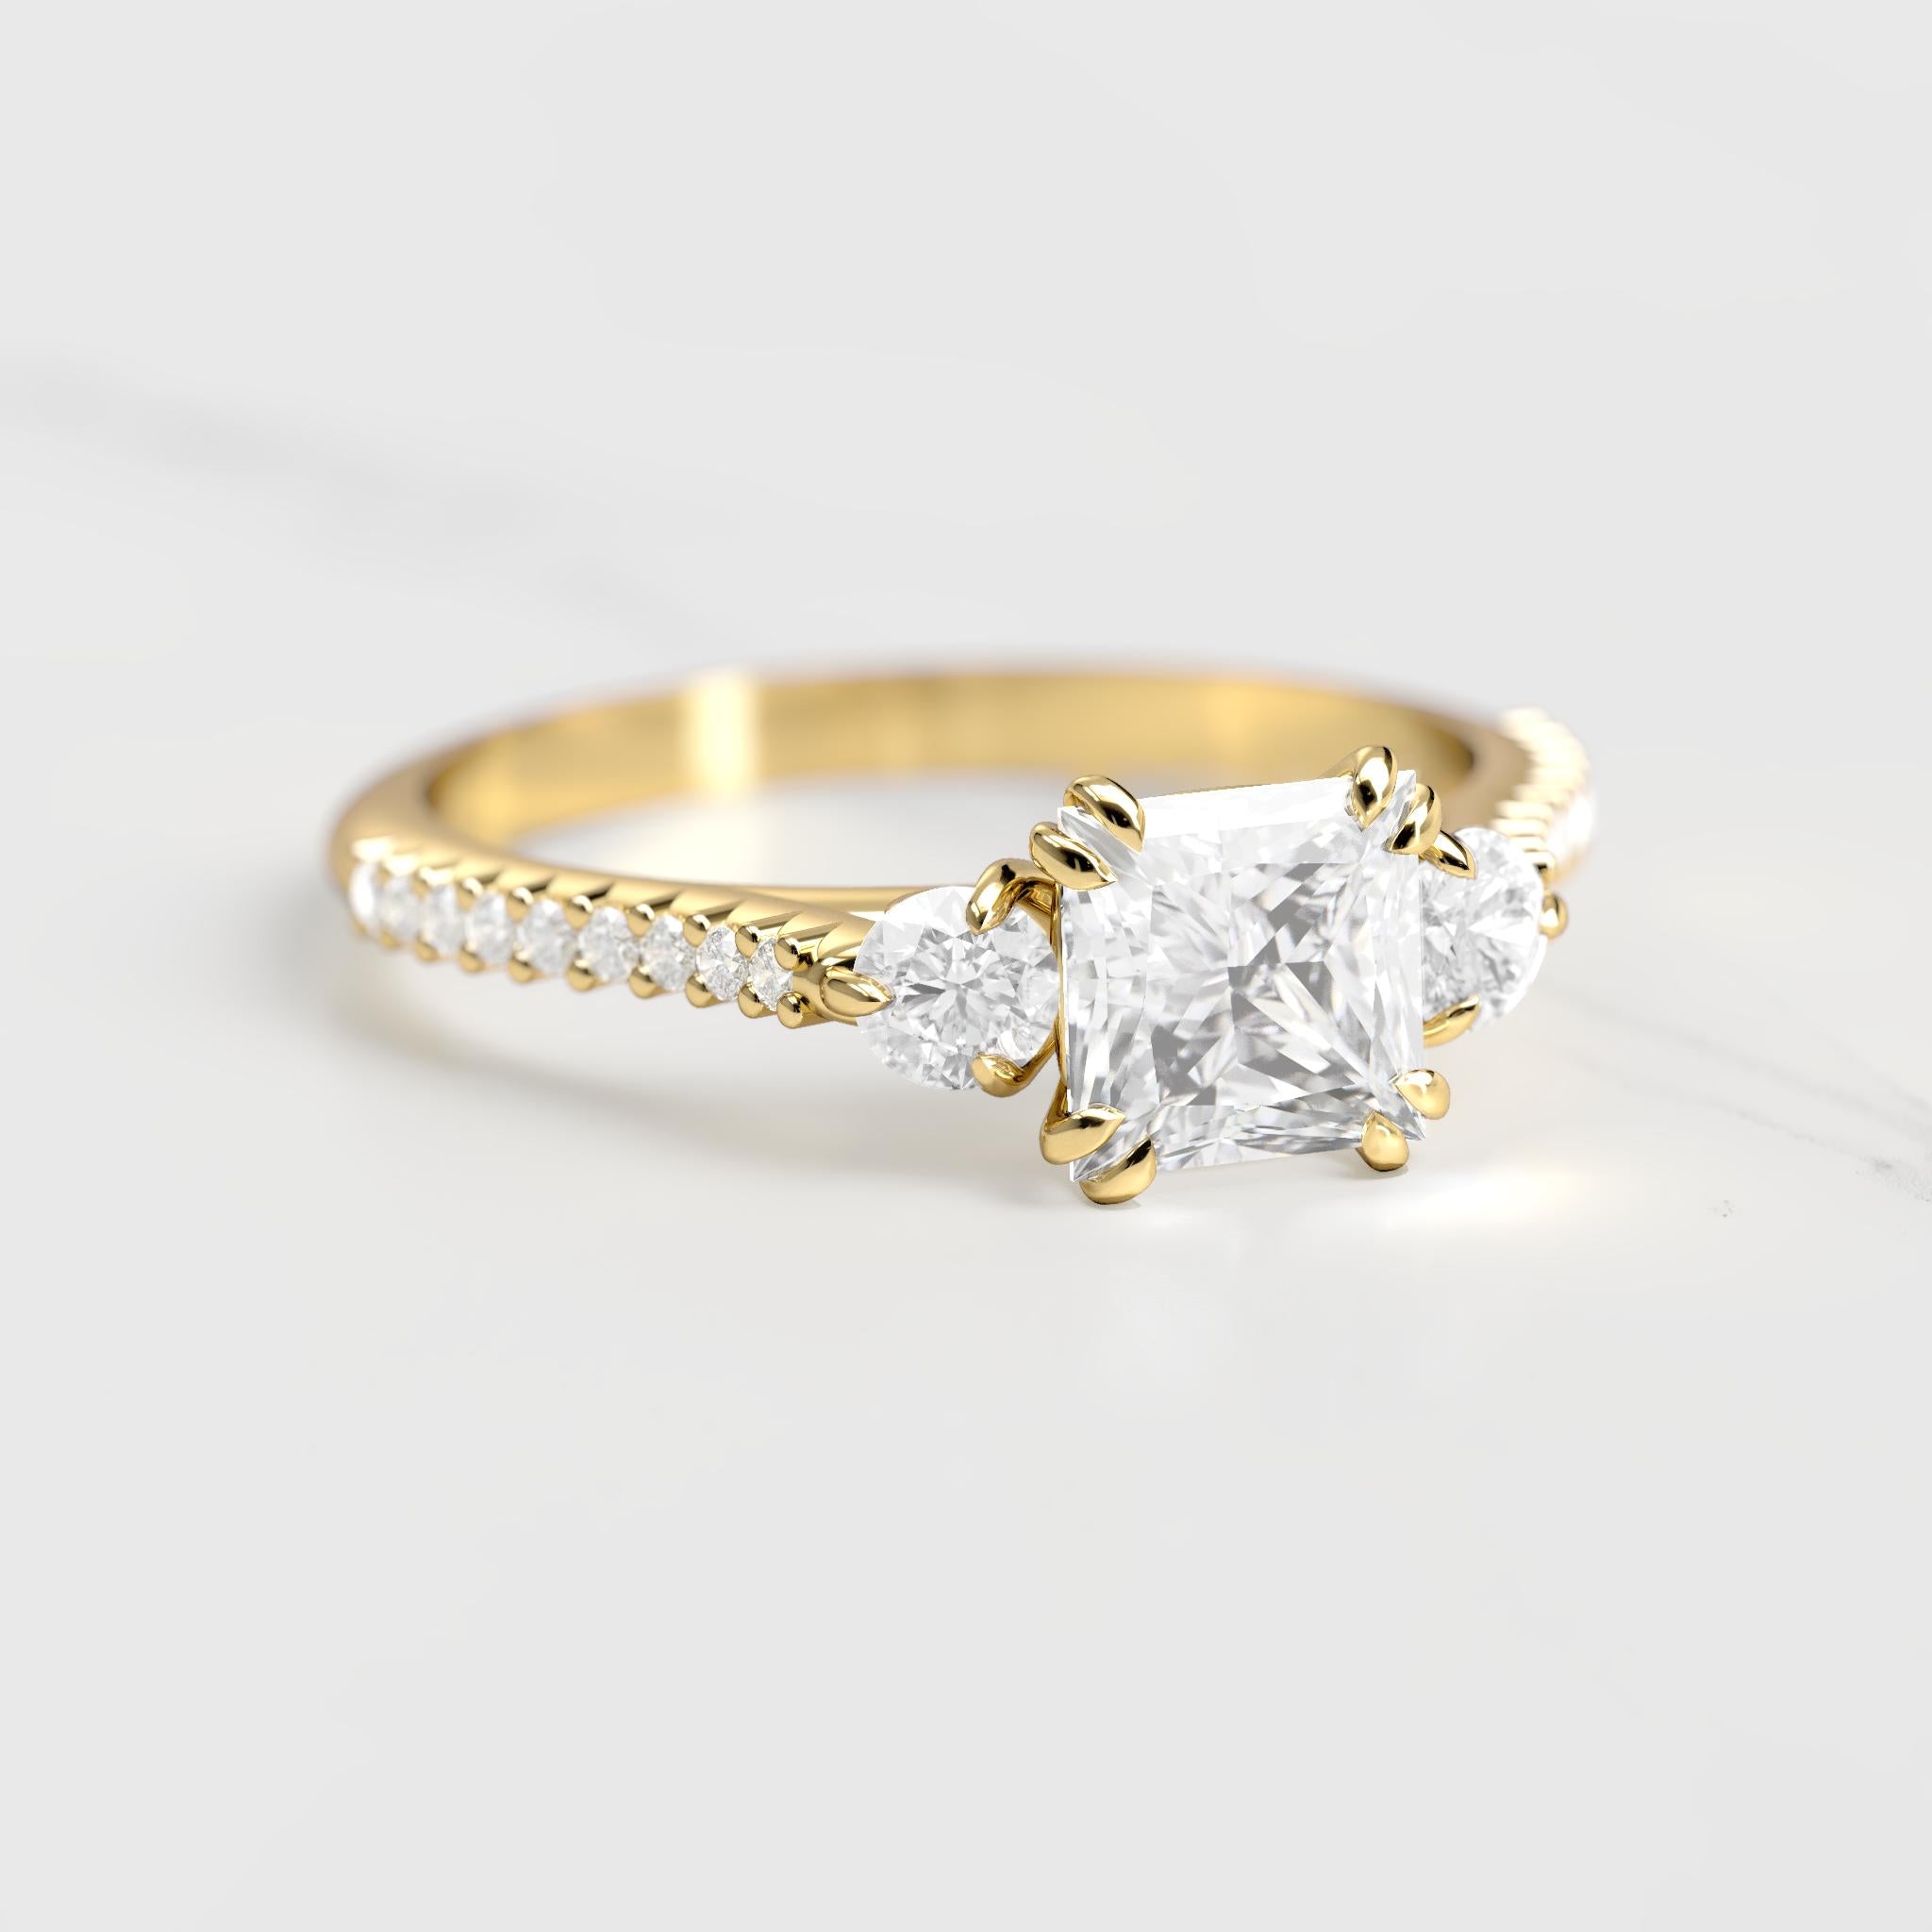 PRINCESS HALF PAVE DIAMOND RING WITH ACCENT STONES - 14k white gold / 0.3ct / lab diamond